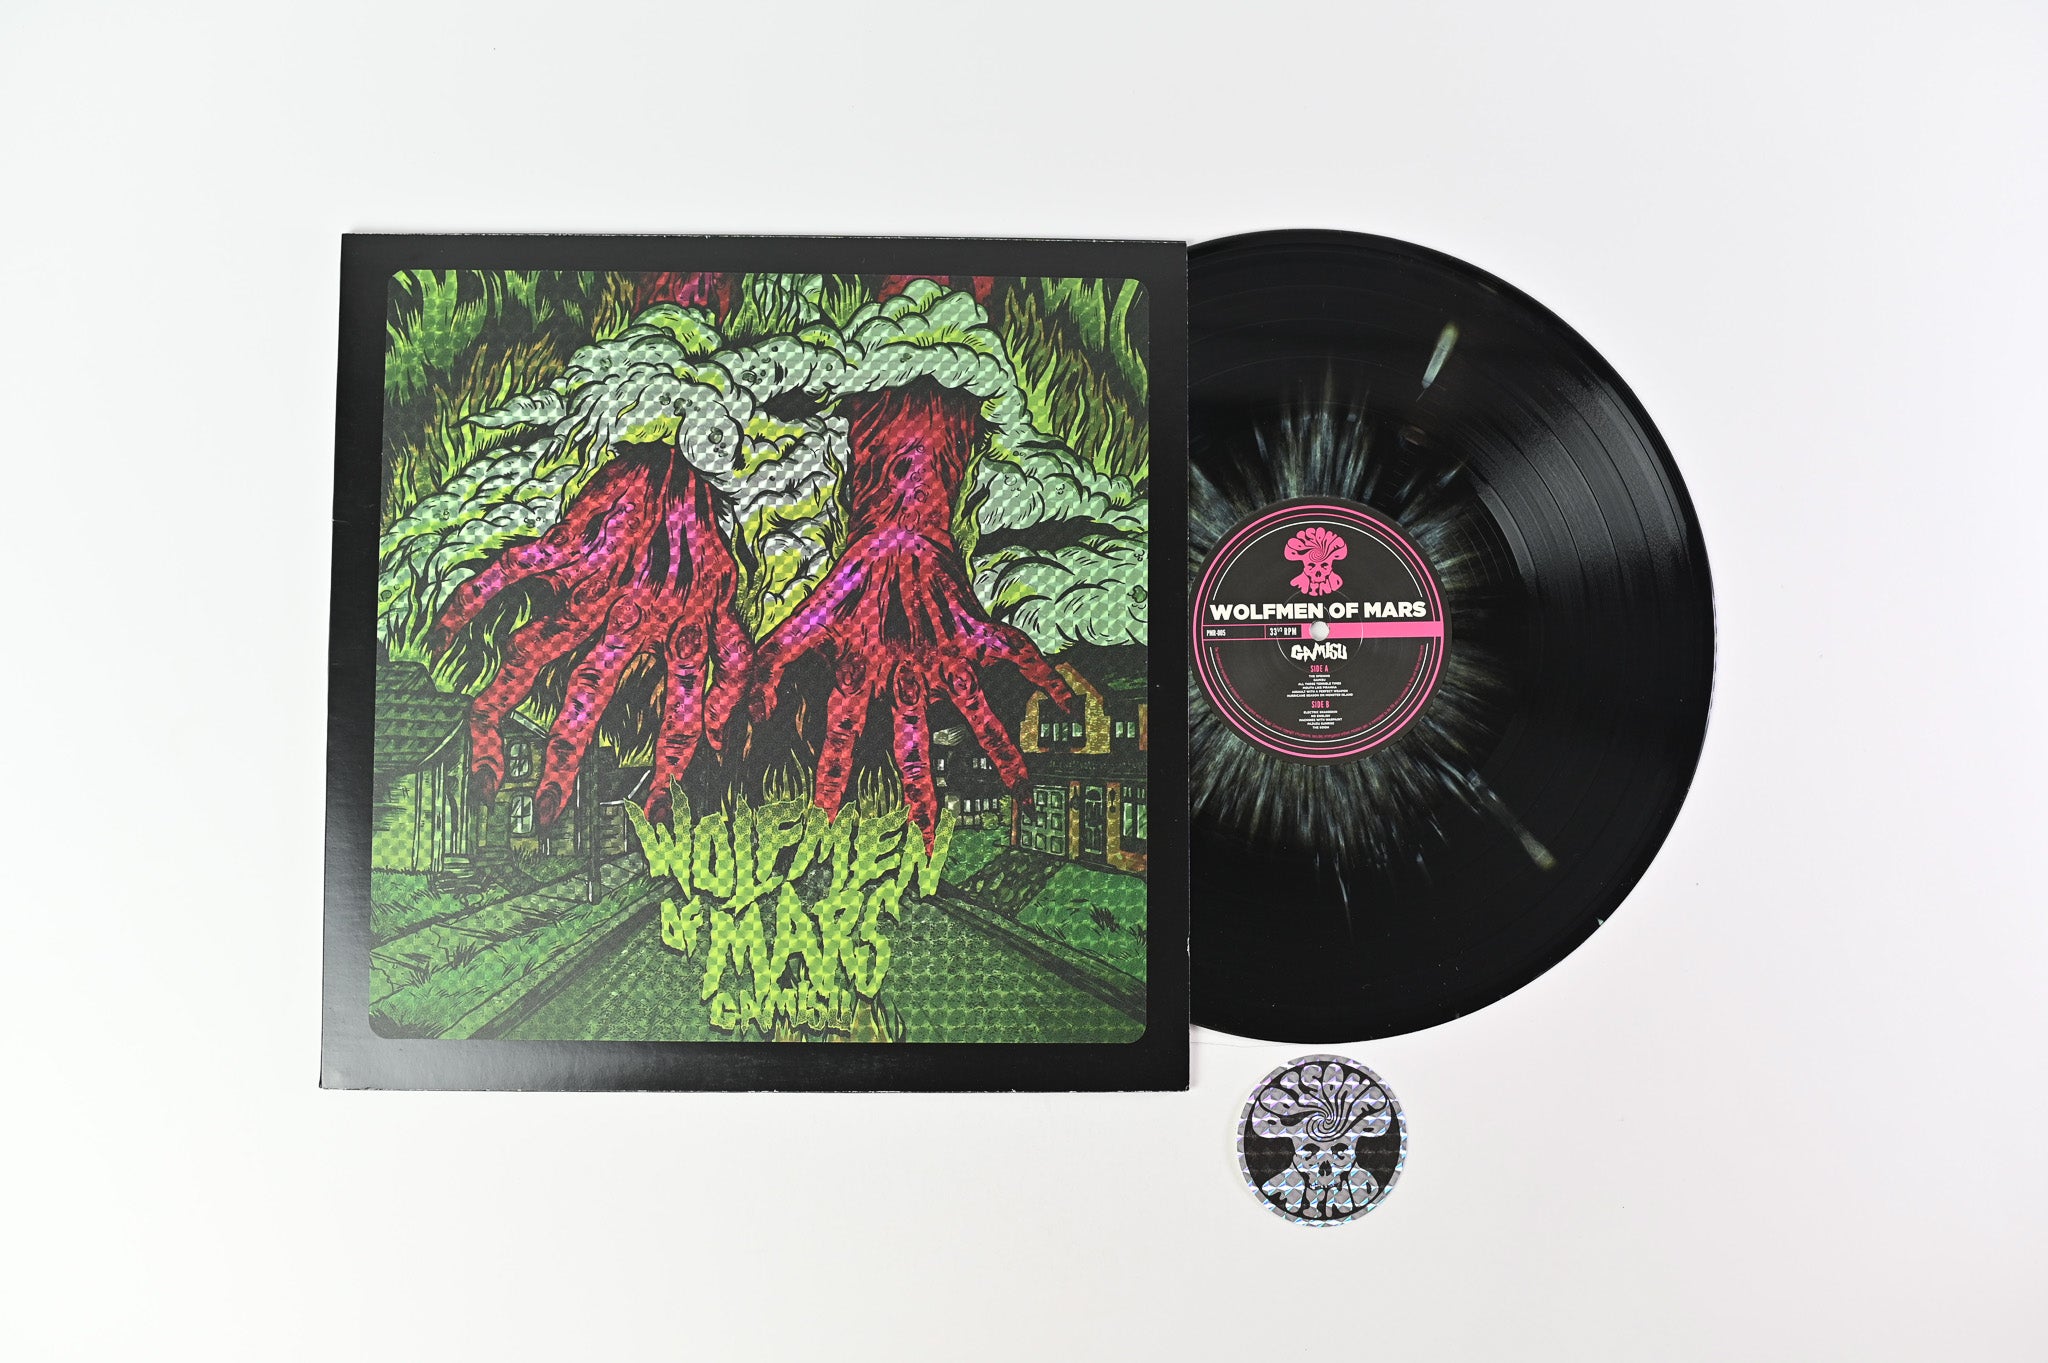 Wolfmen Of Mars - Gamisu on Poisoned Mind Ltd Numbered Black / Green Vinyl